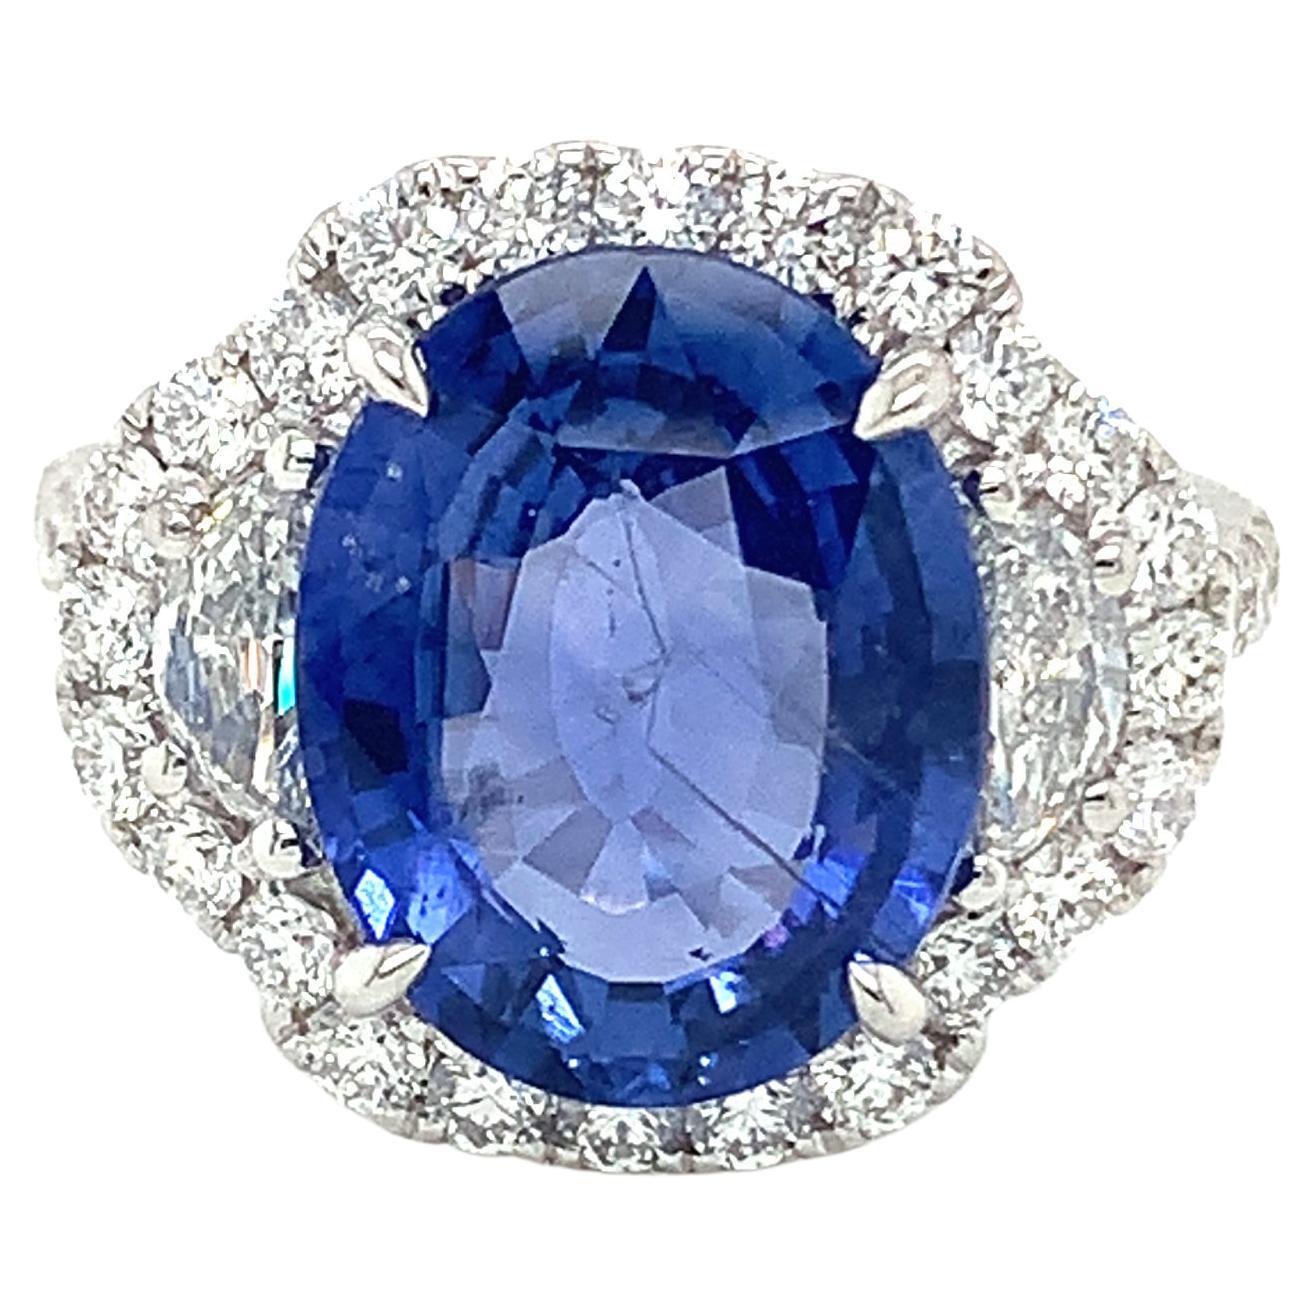 5.86 Carat Blue Sapphire & Diamond Ring in 18 Karat White Gold For Sale